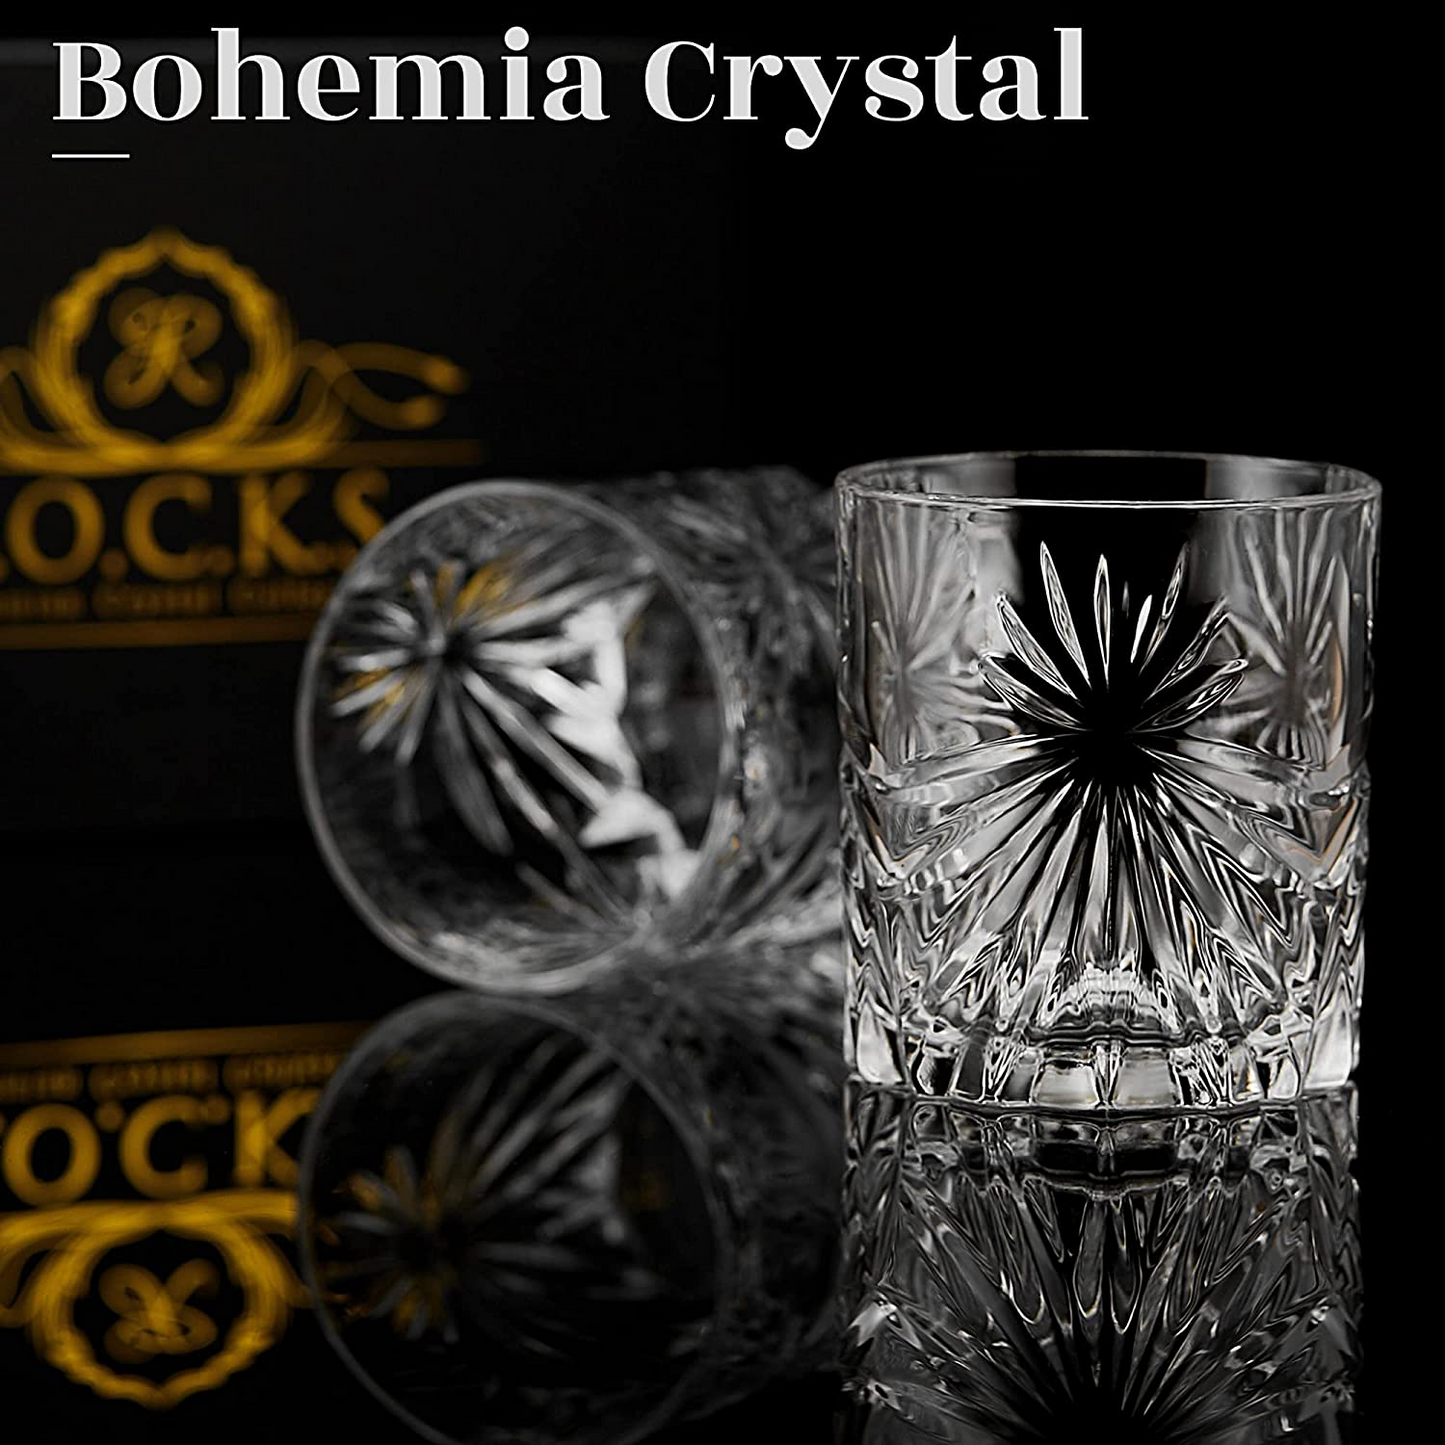 Classic Bohemia Crystal Whiskey Glasses - Set of 2 Soleil Glass Tumblers (10.7oz)